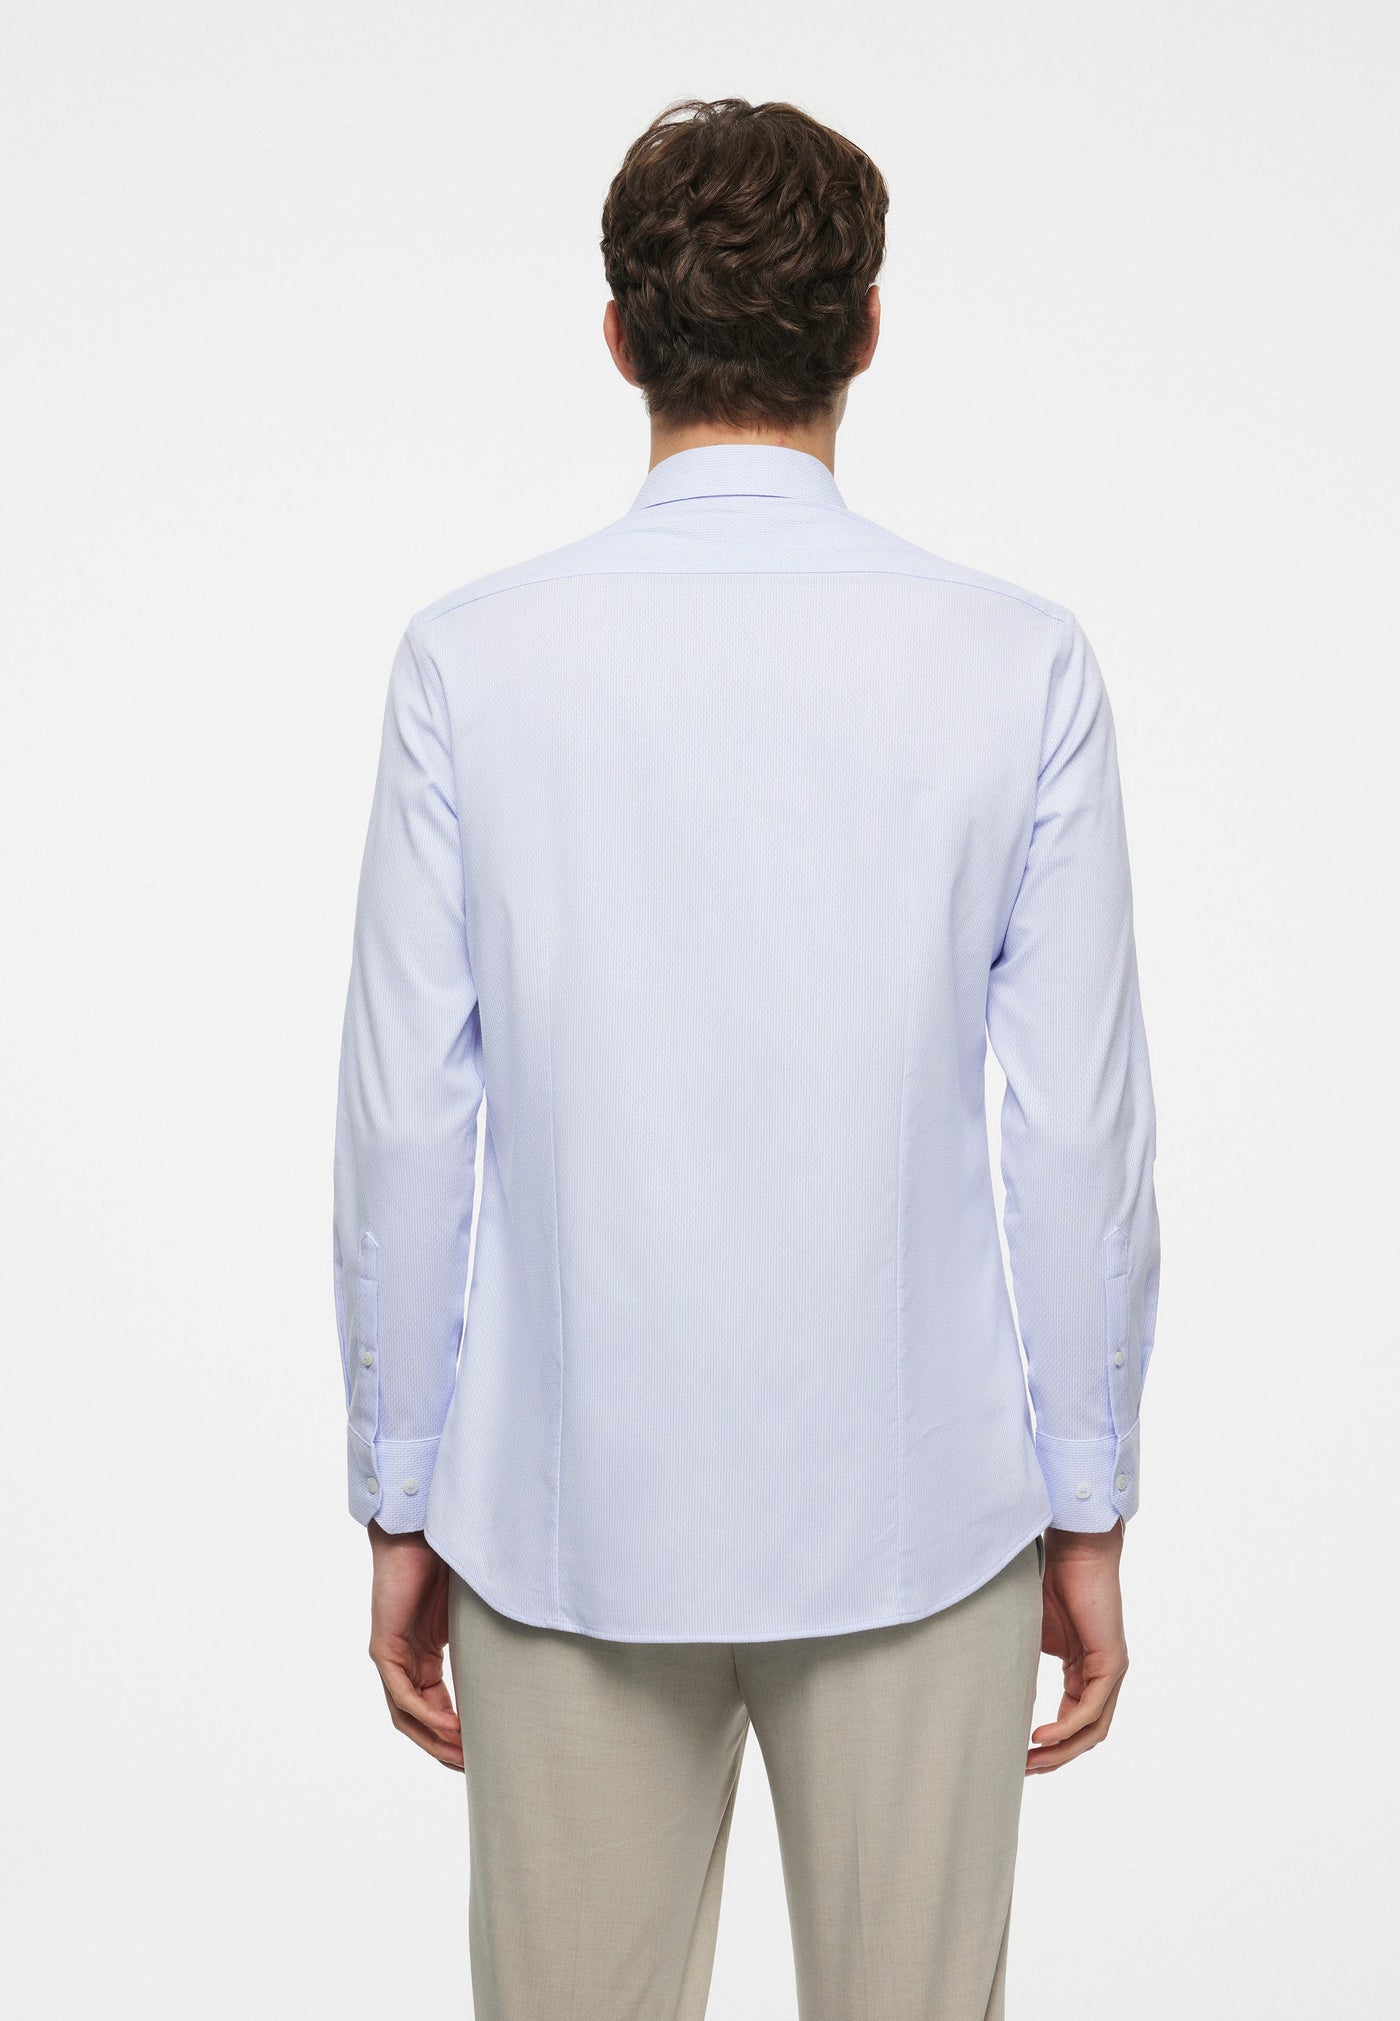 Meneason - Easy Care Stretch Formal Shirt Smart Fit